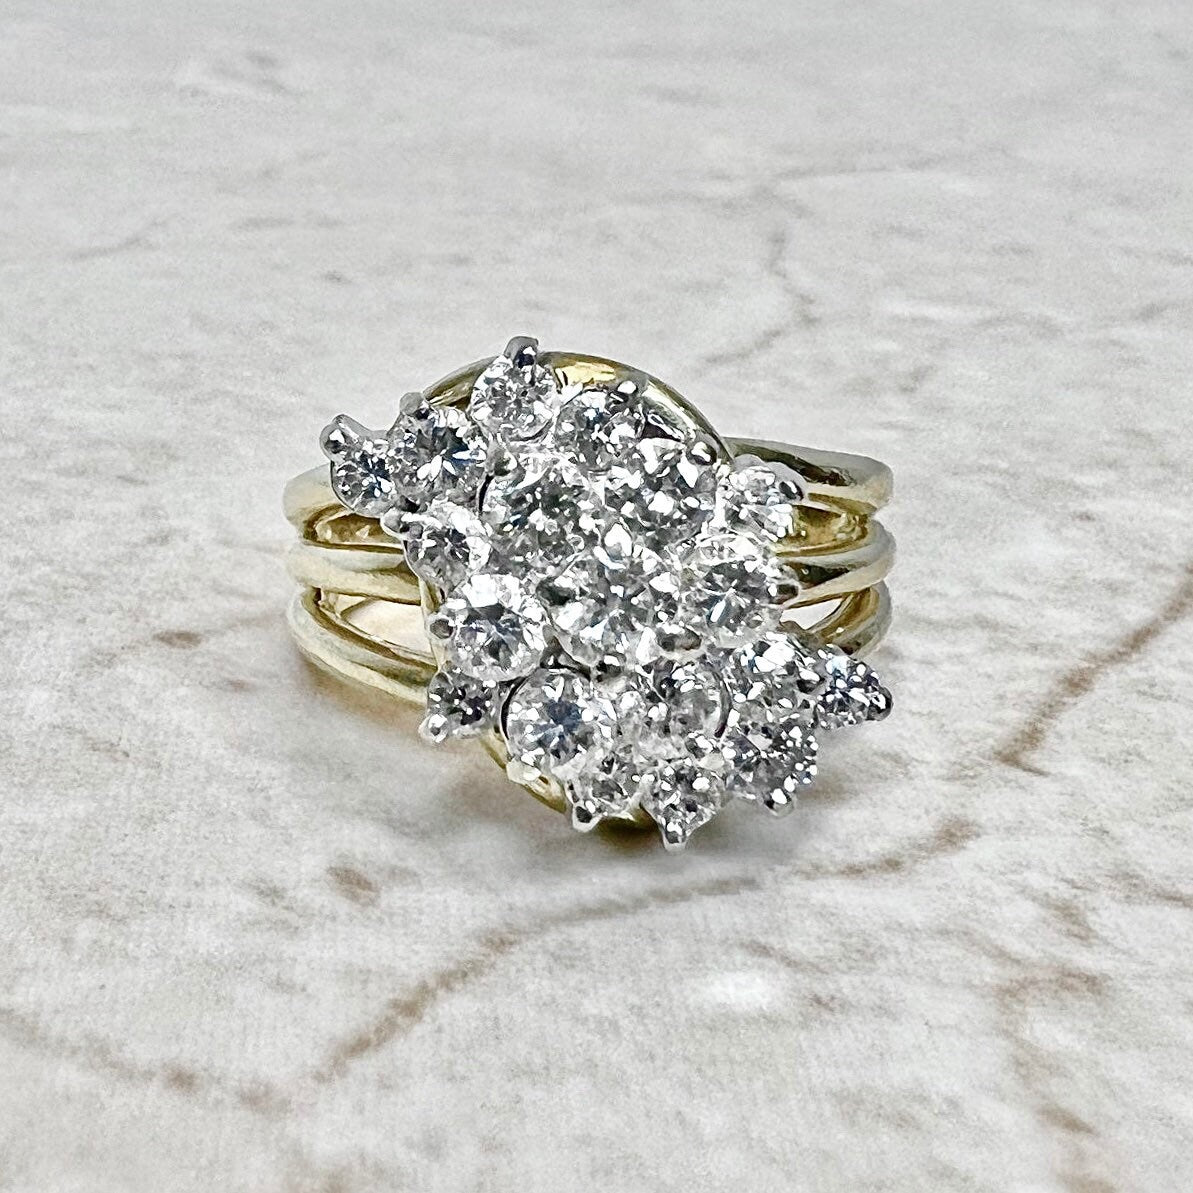 CLEARANCE 40% OFF - Fine Vintage 14 Karat Yellow & White Gold 1.35 Carat Diamond Cluster Ring - WeilJewelry